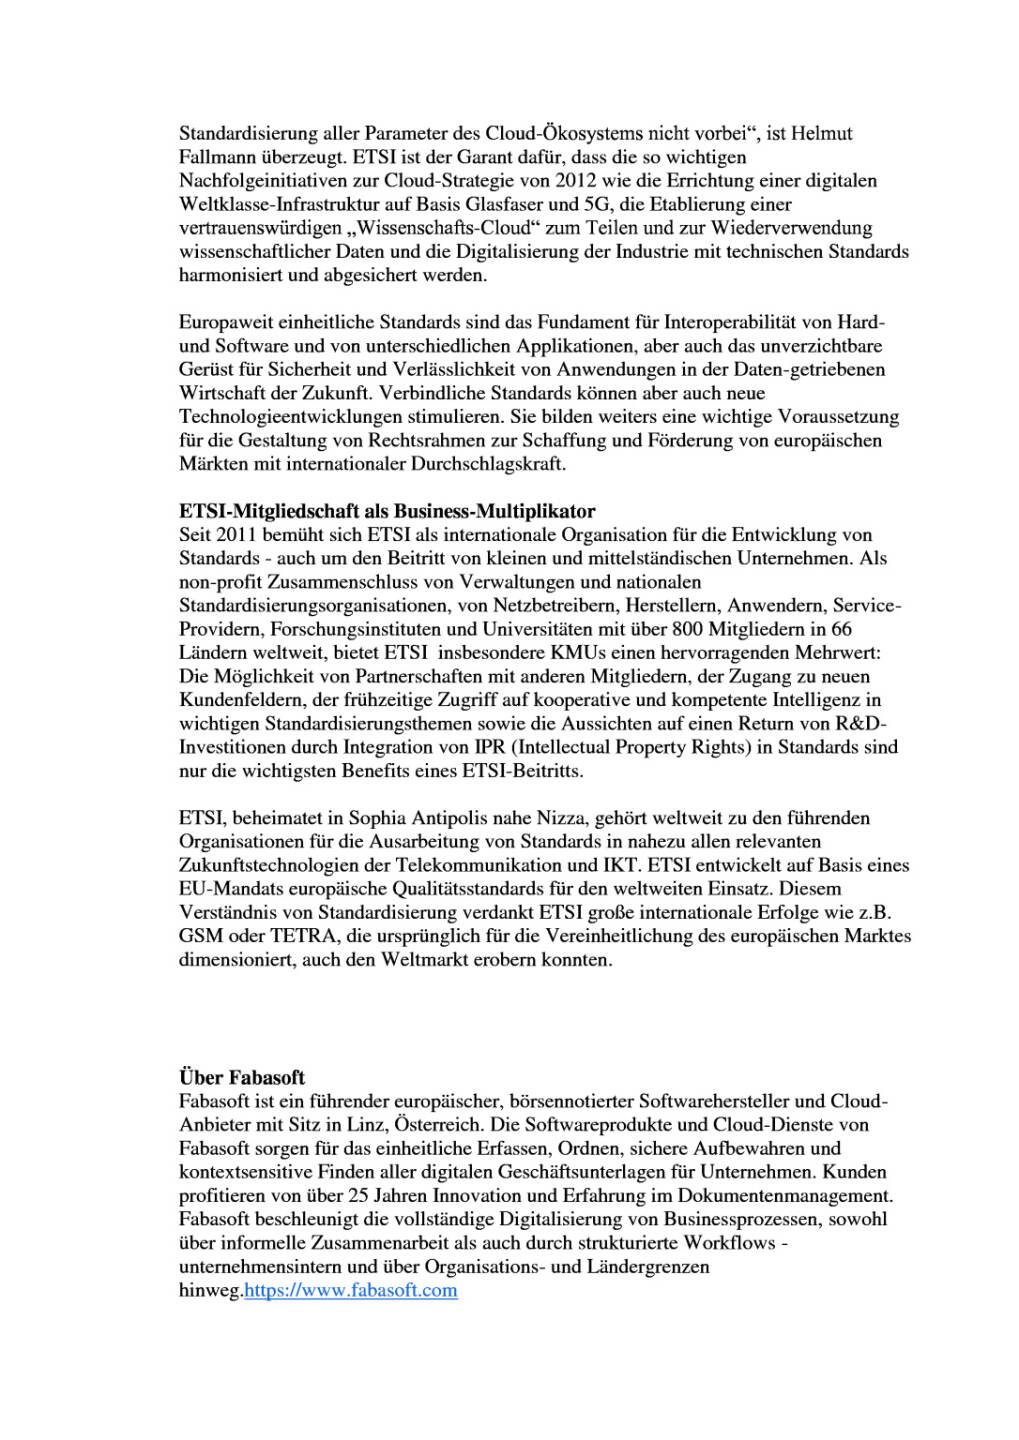 Fabasoft ist Mitglied bei ETSI, Seite 2/3, komplettes Dokument unter http://boerse-social.com/static/uploads/file_1146_fabasoft_ist_mitglied_bei_etsi.pdf